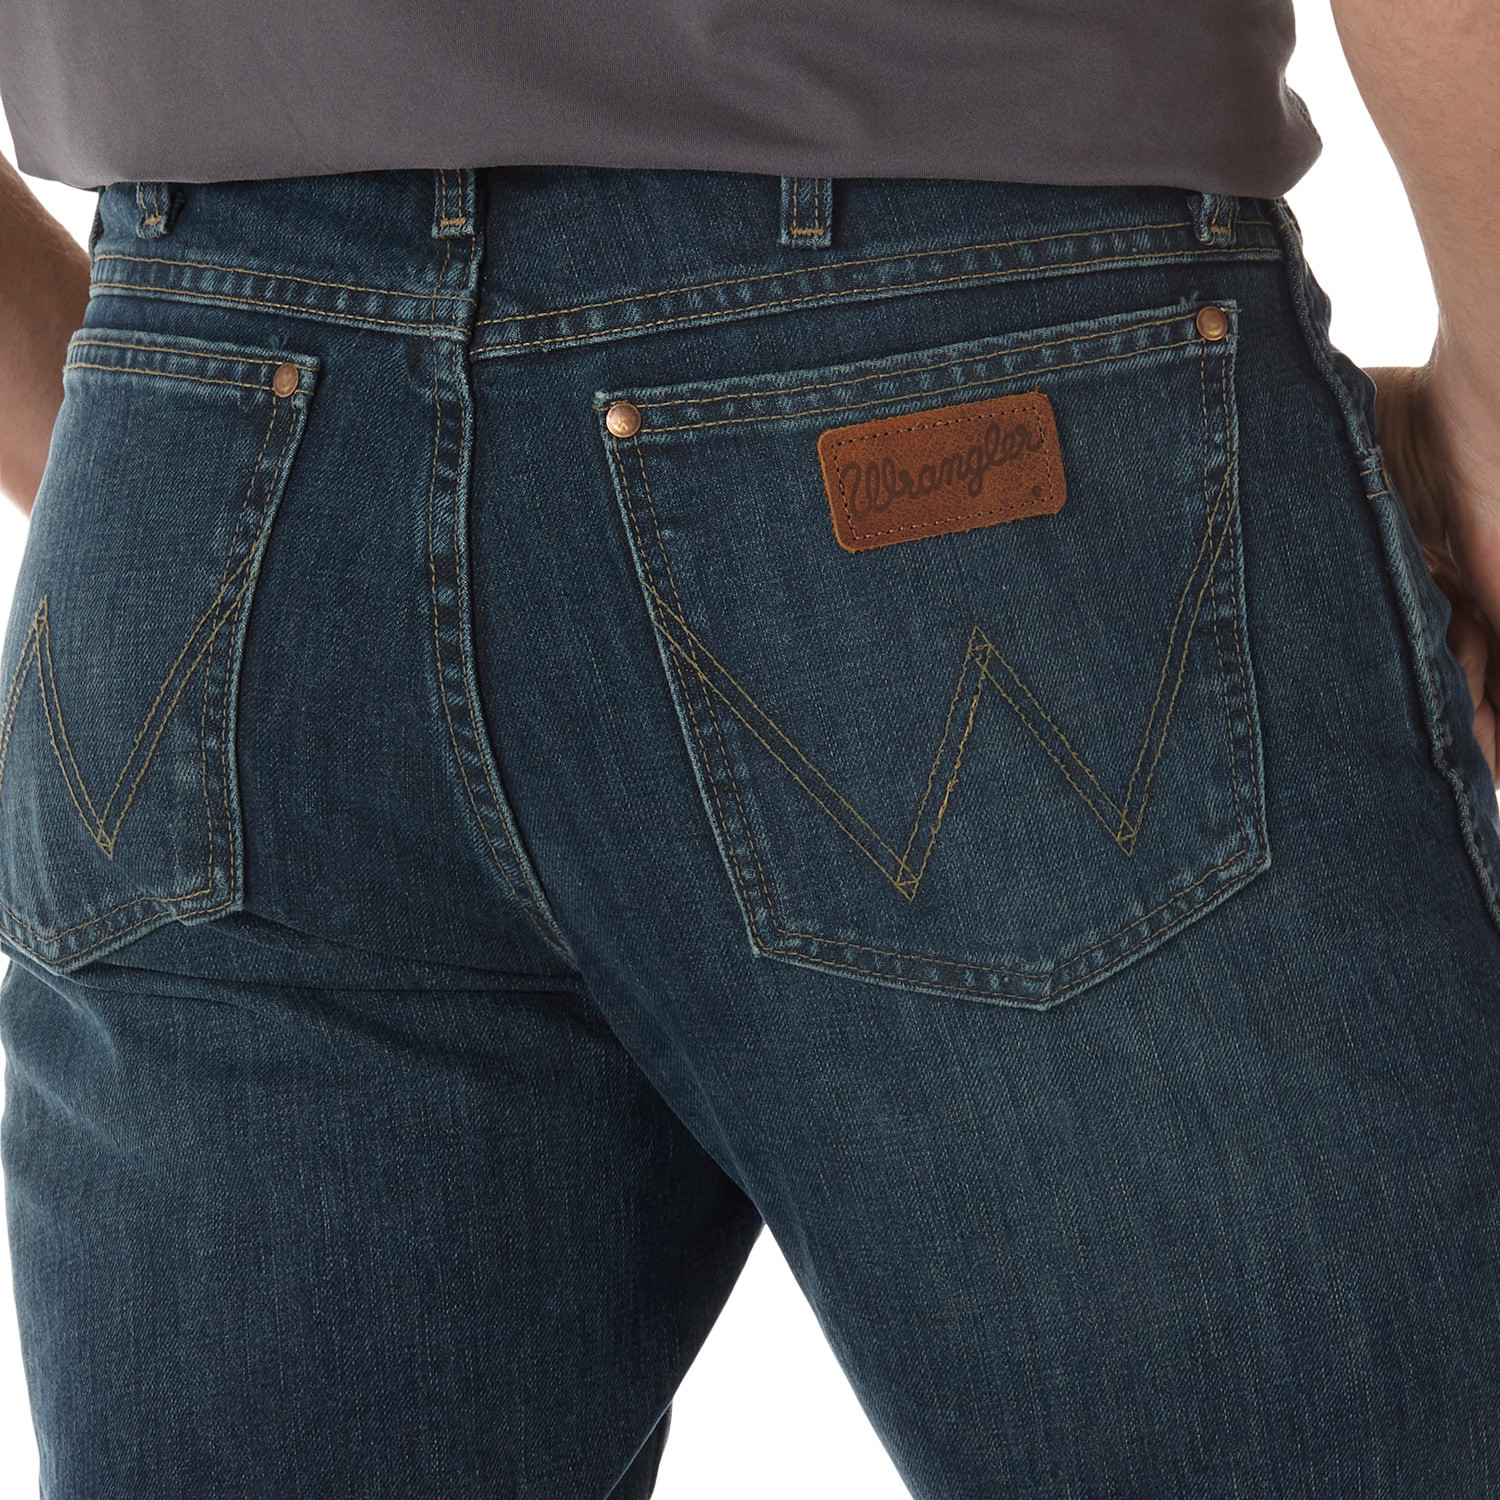 Wrangler Retro Slim Fit Bootcut Jeans | River Wash - Frontier Western Shop